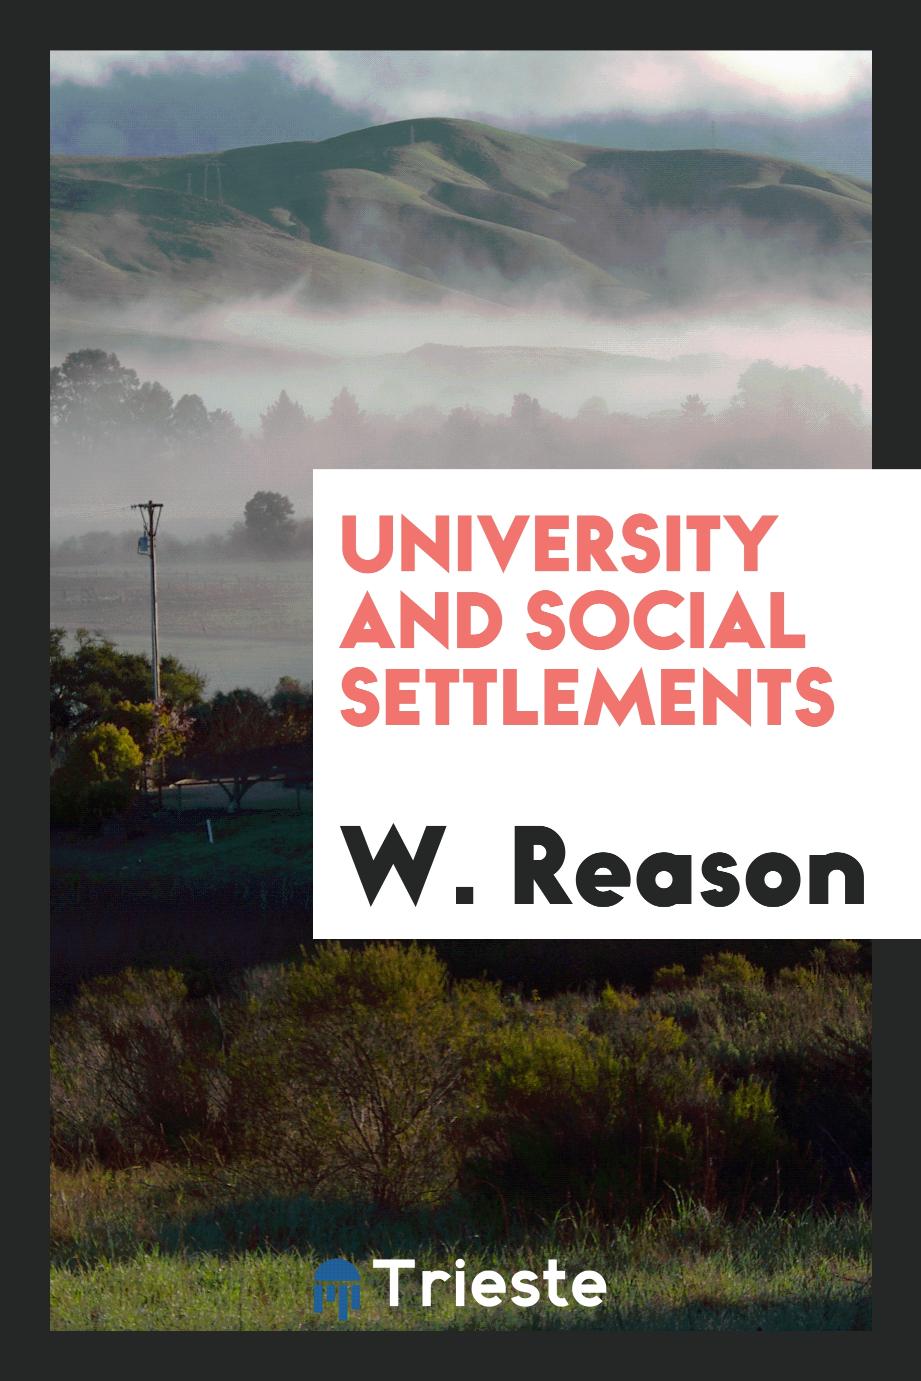 University and social settlements